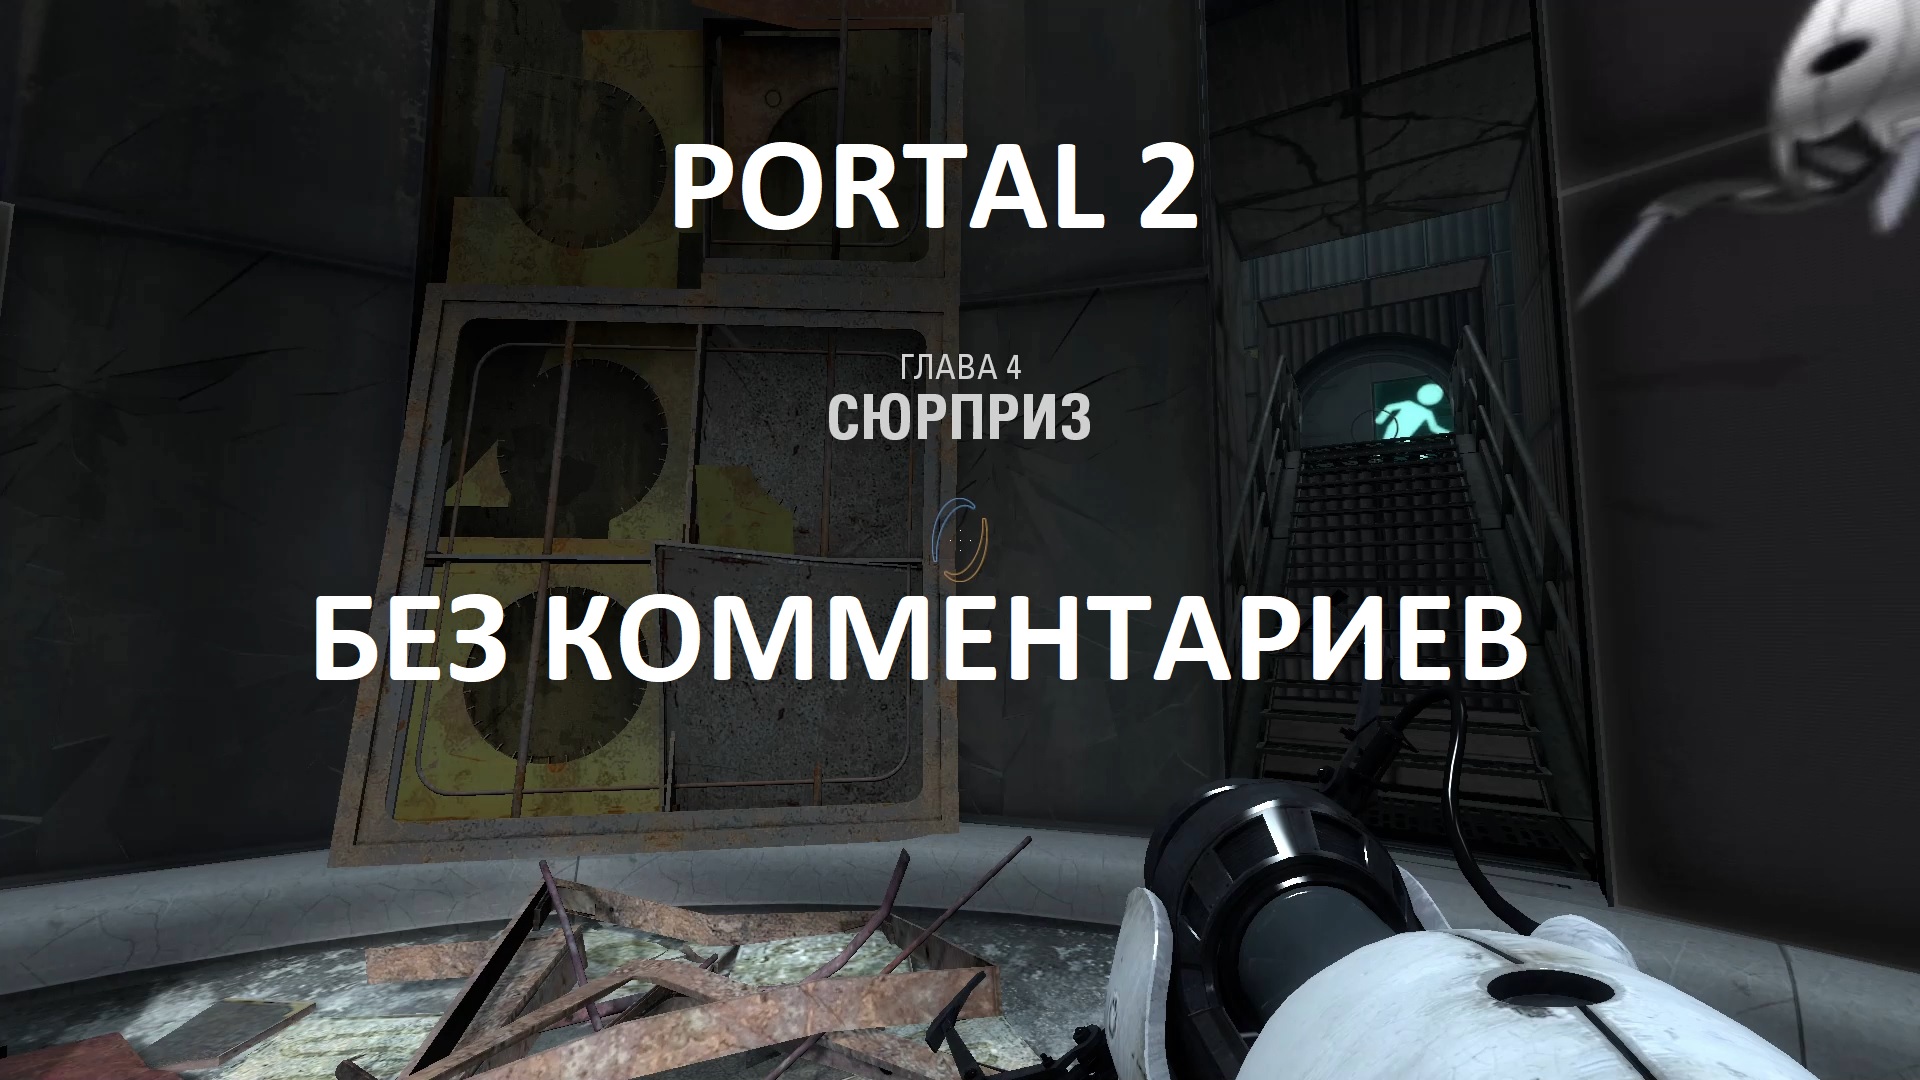 Portal 2 кооператив на сколько человек фото 38